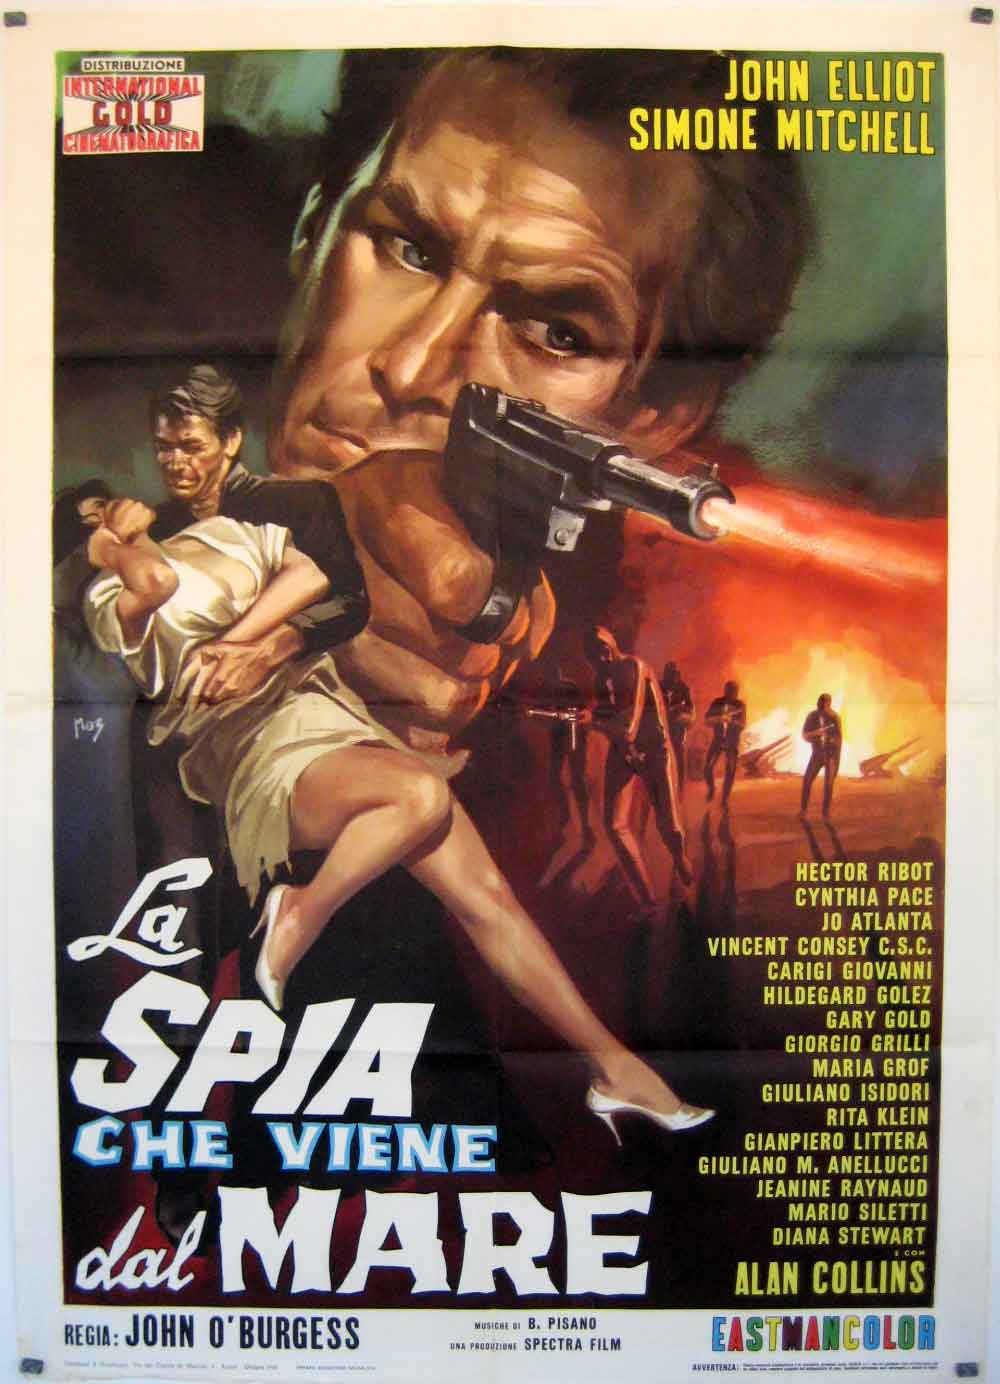 La spia che viene dal mare (1966) with English Subtitles on DVD on DVD